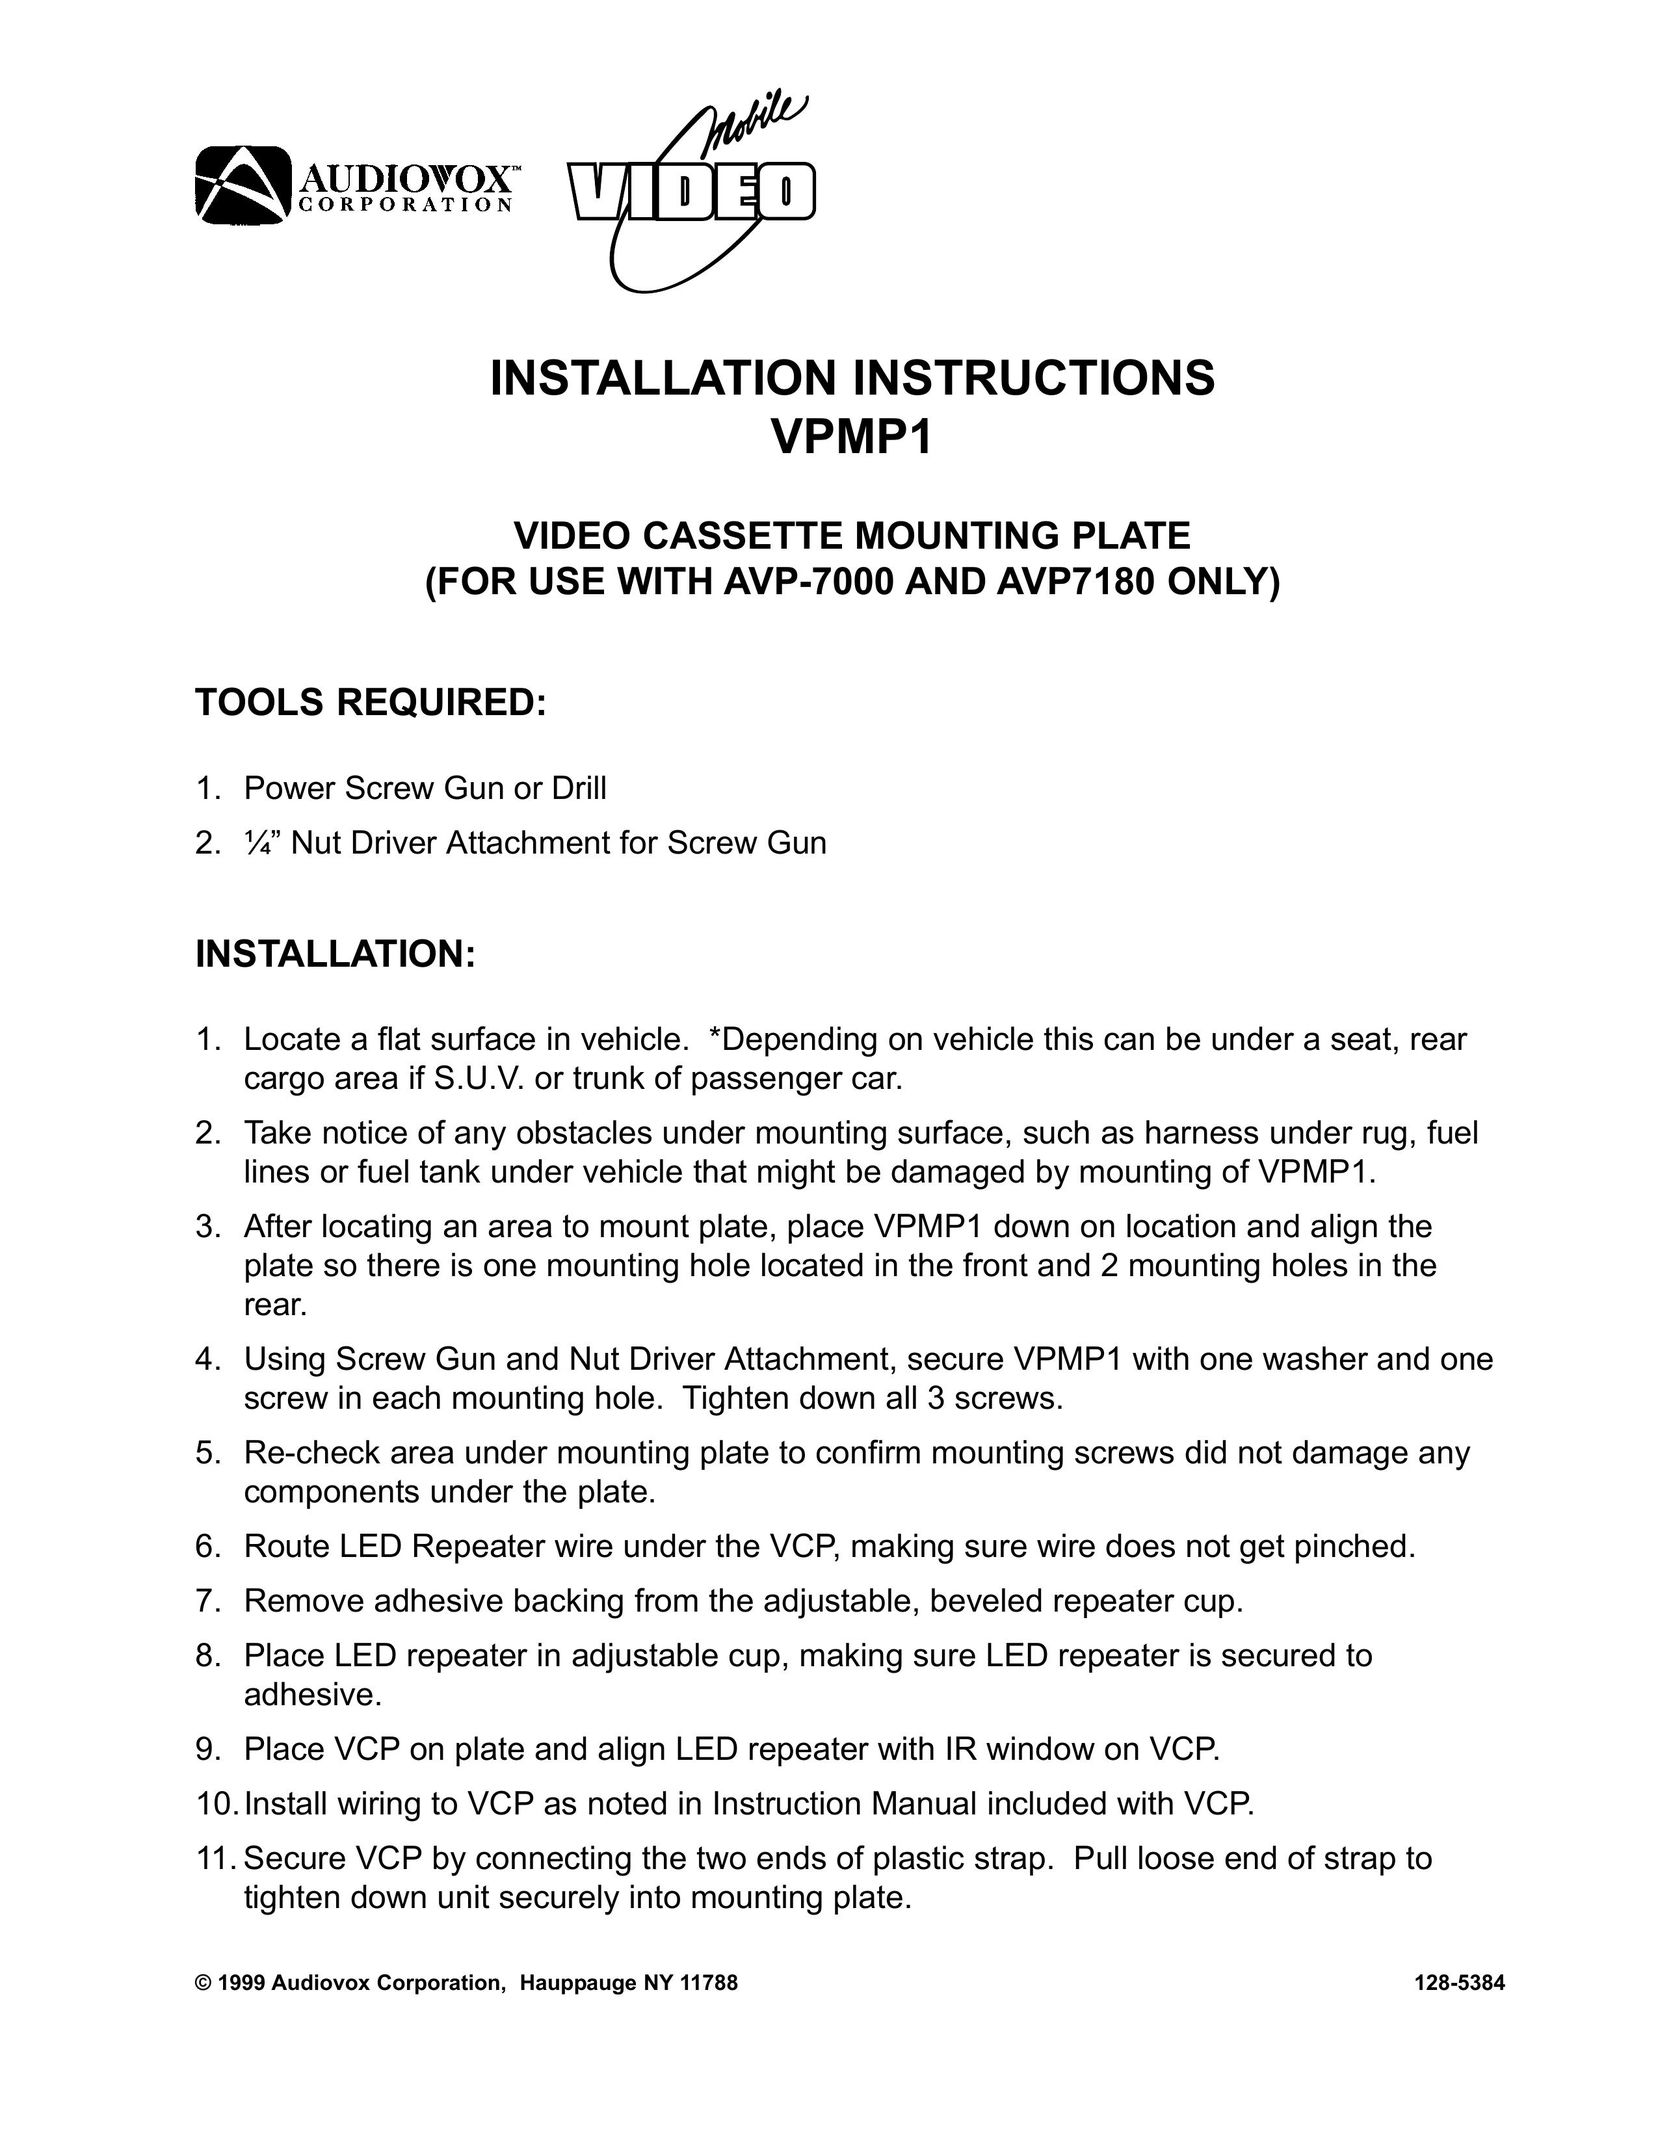 Audiovox VPMP1 VCR User Manual